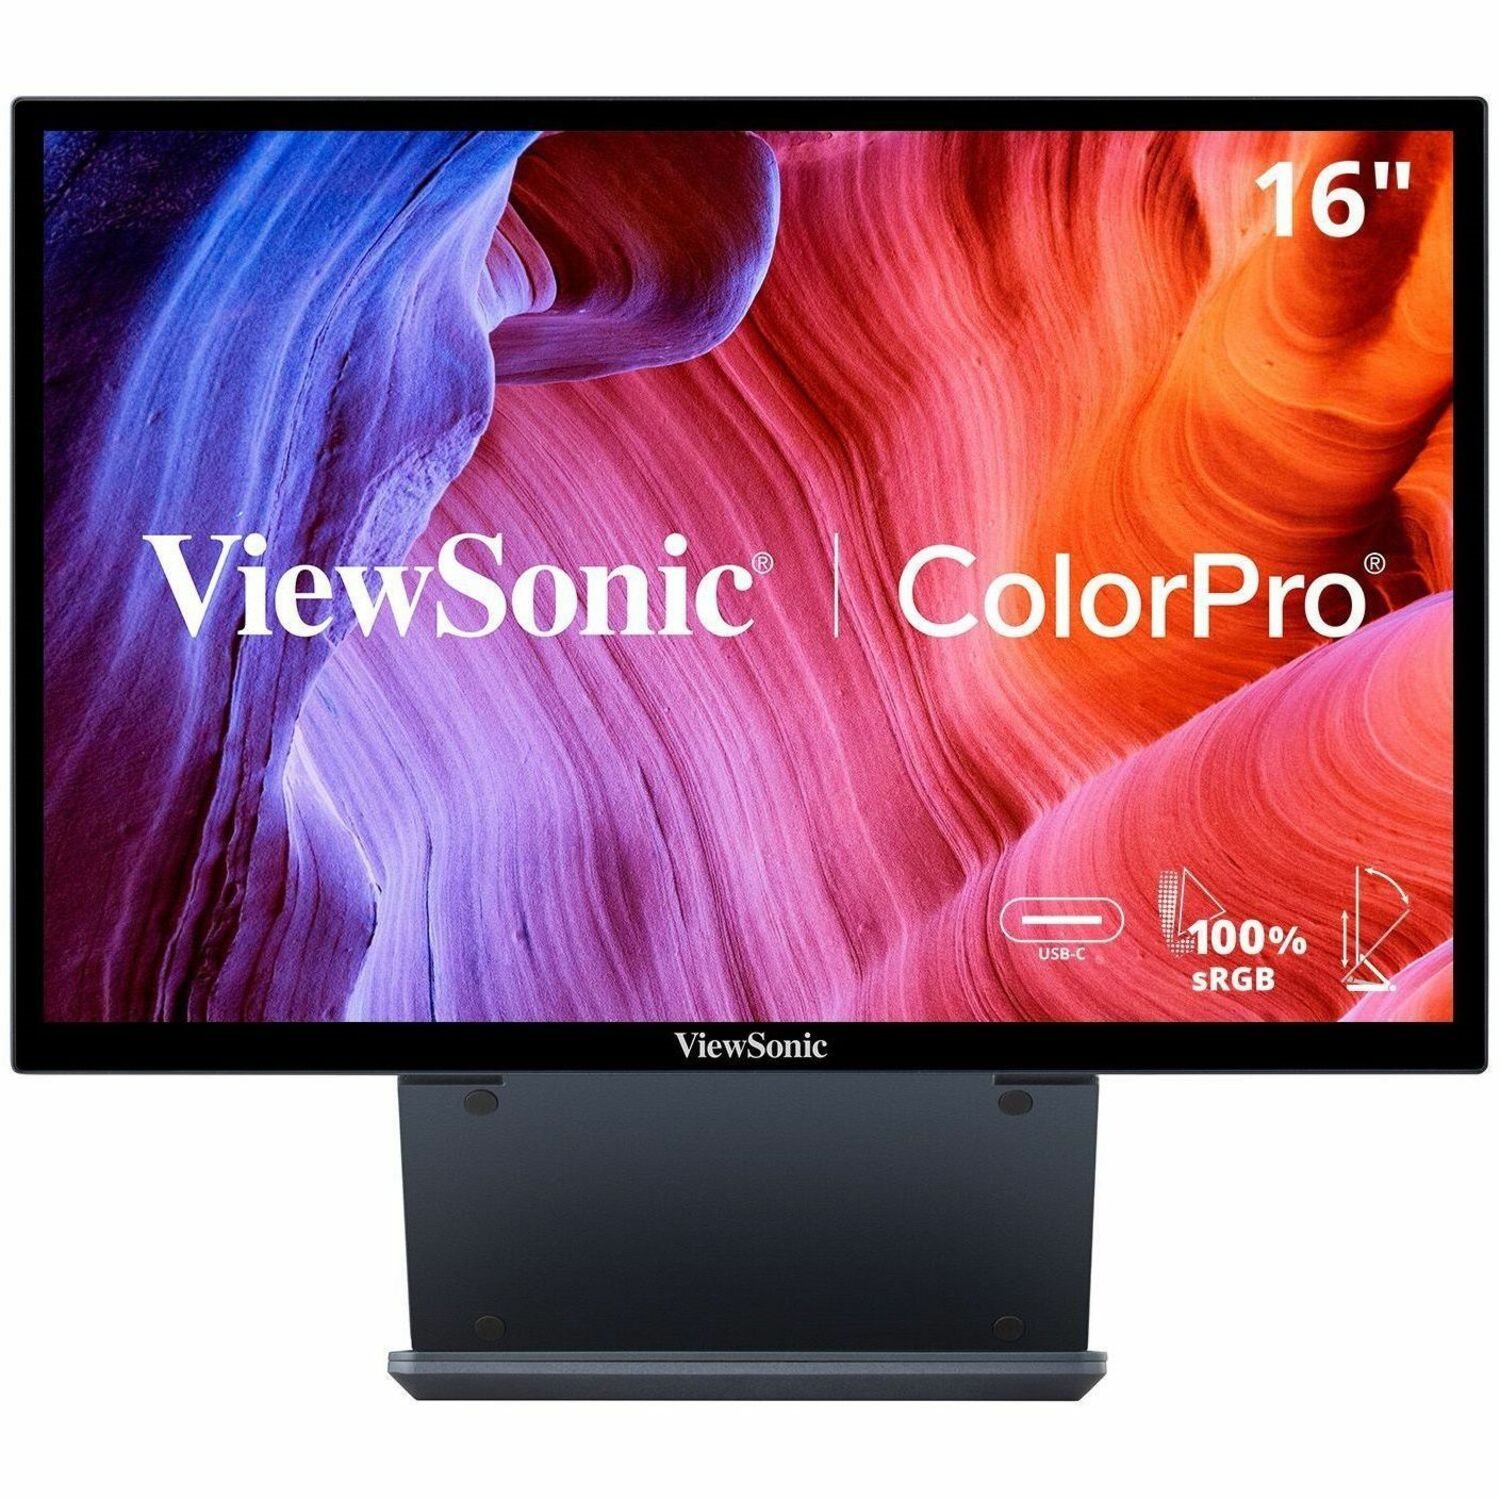 ViewSonic ColorPro VP1656 16" Class WUXGA LED Monitor - 16:10